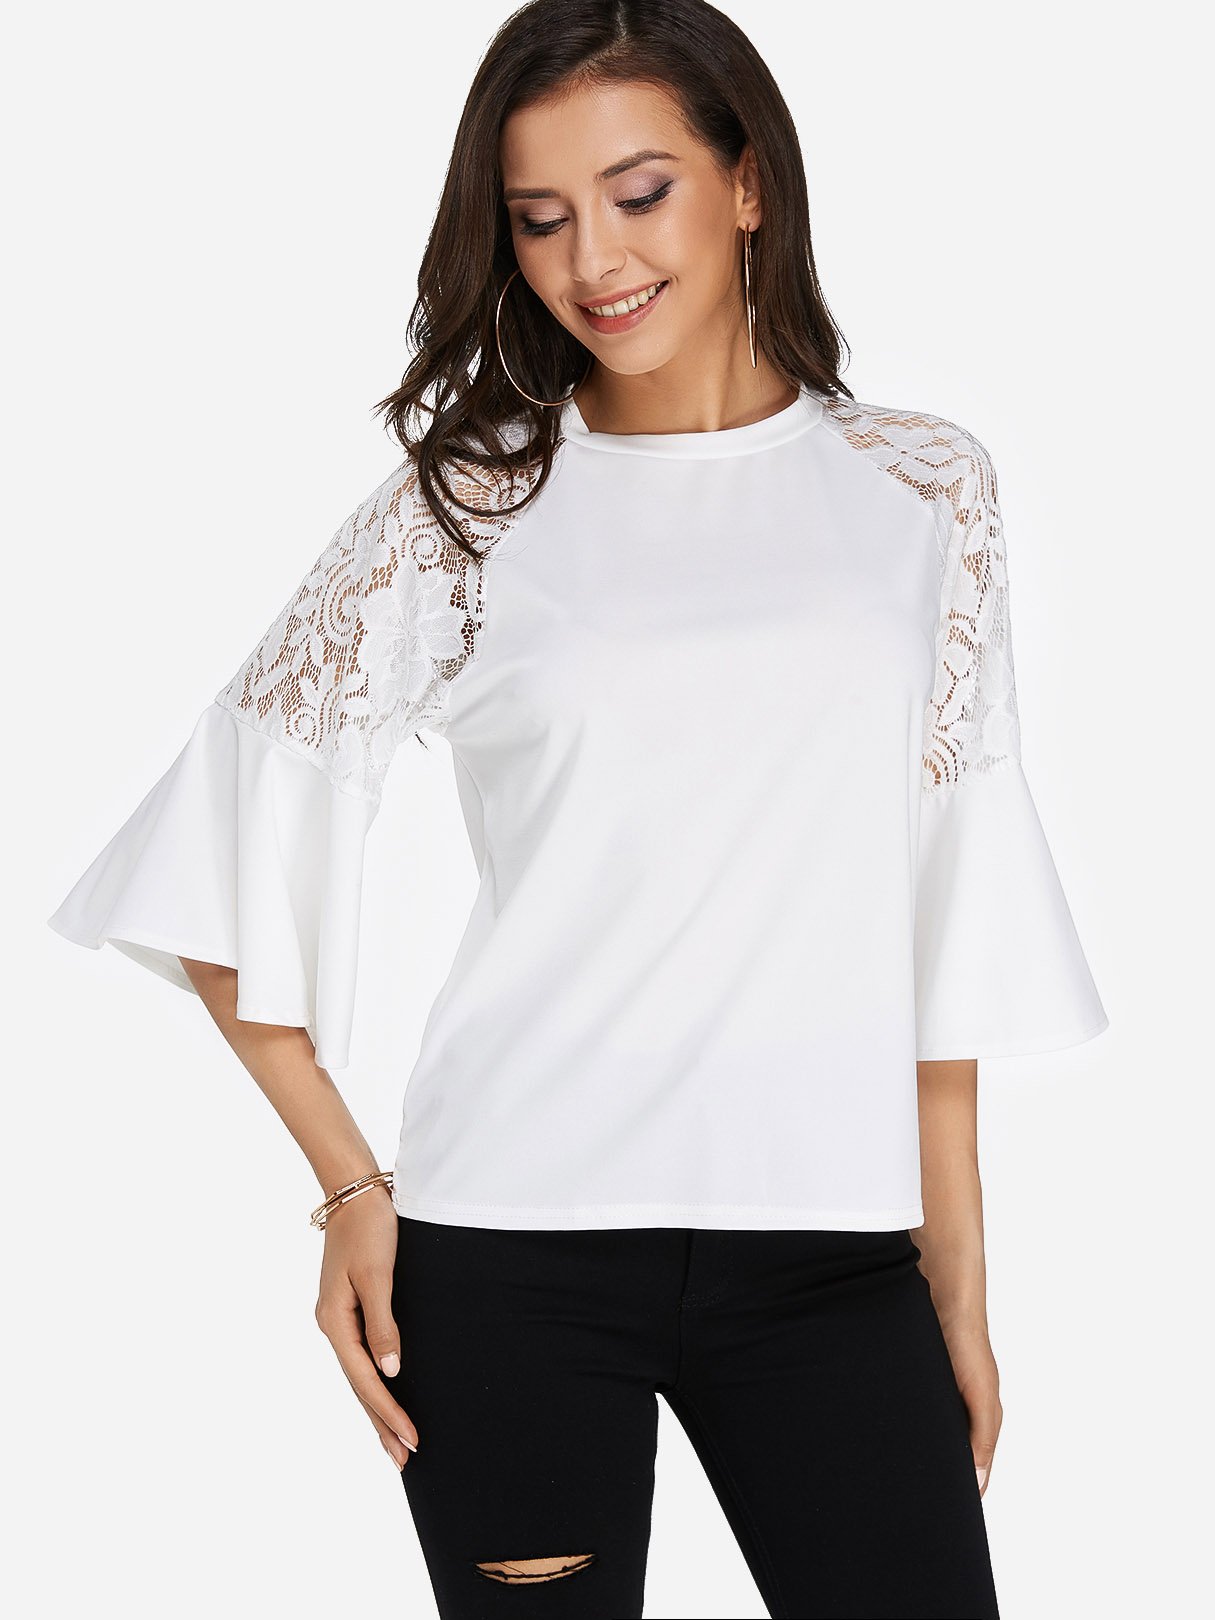 Wholesale Round Neck Lace Half Sleeve White T-Shirts